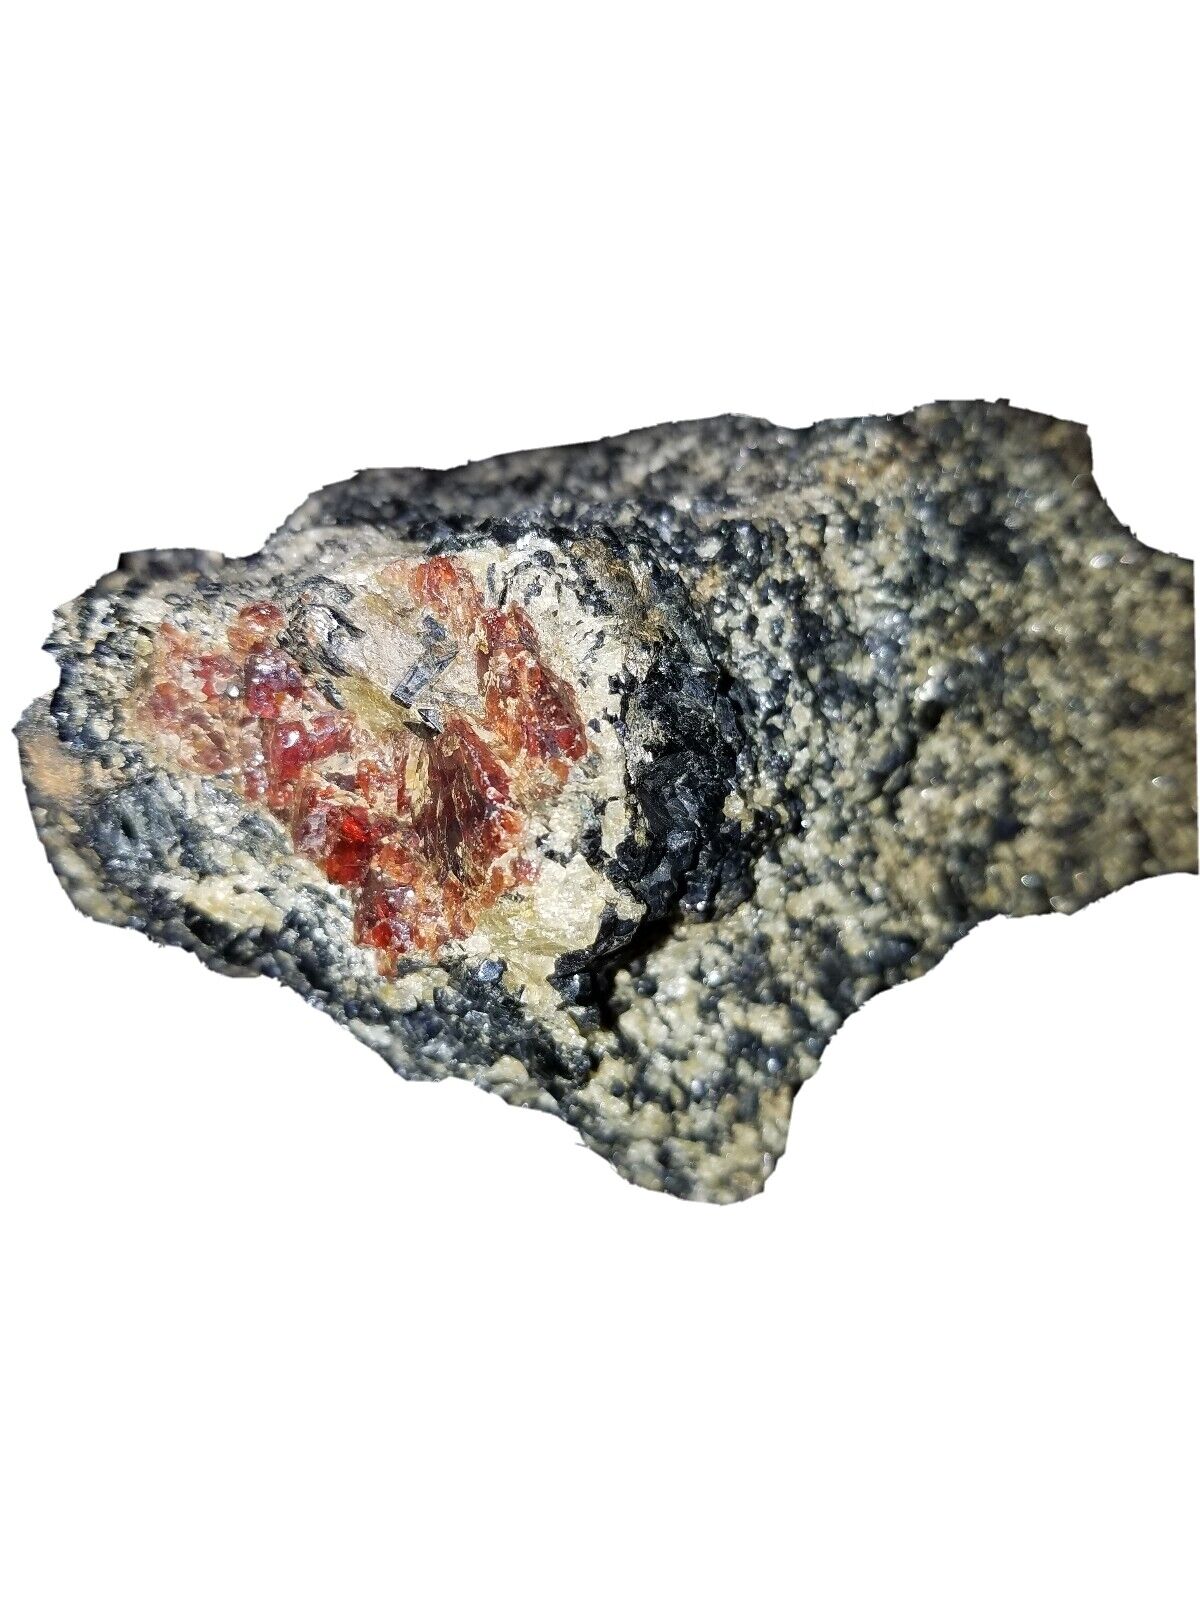 ULTRA RARE Almandine Garnets in Raw Natural Minerals